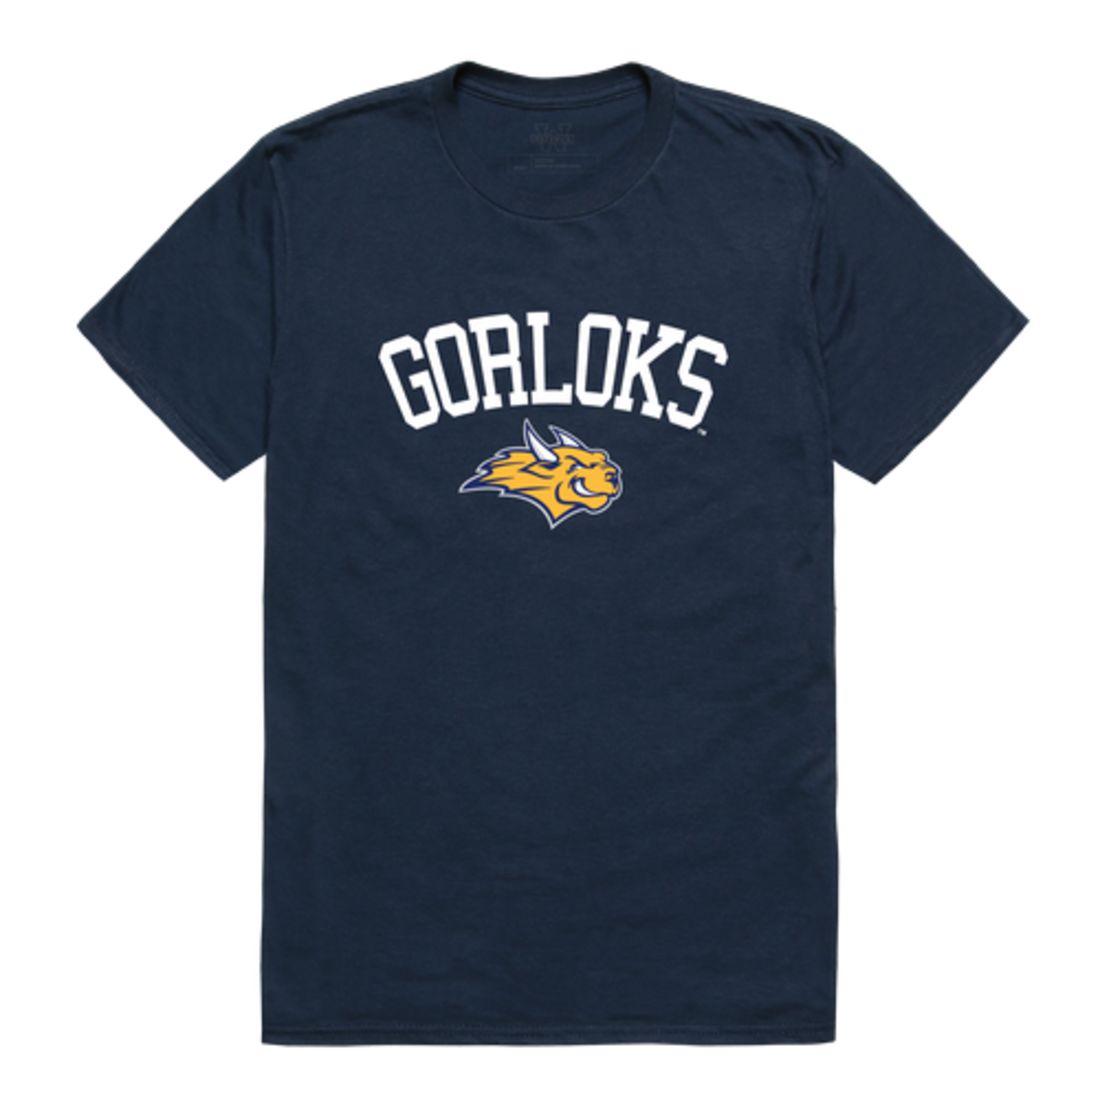 Webster University Gorlocks Arch T-Shirt Tee